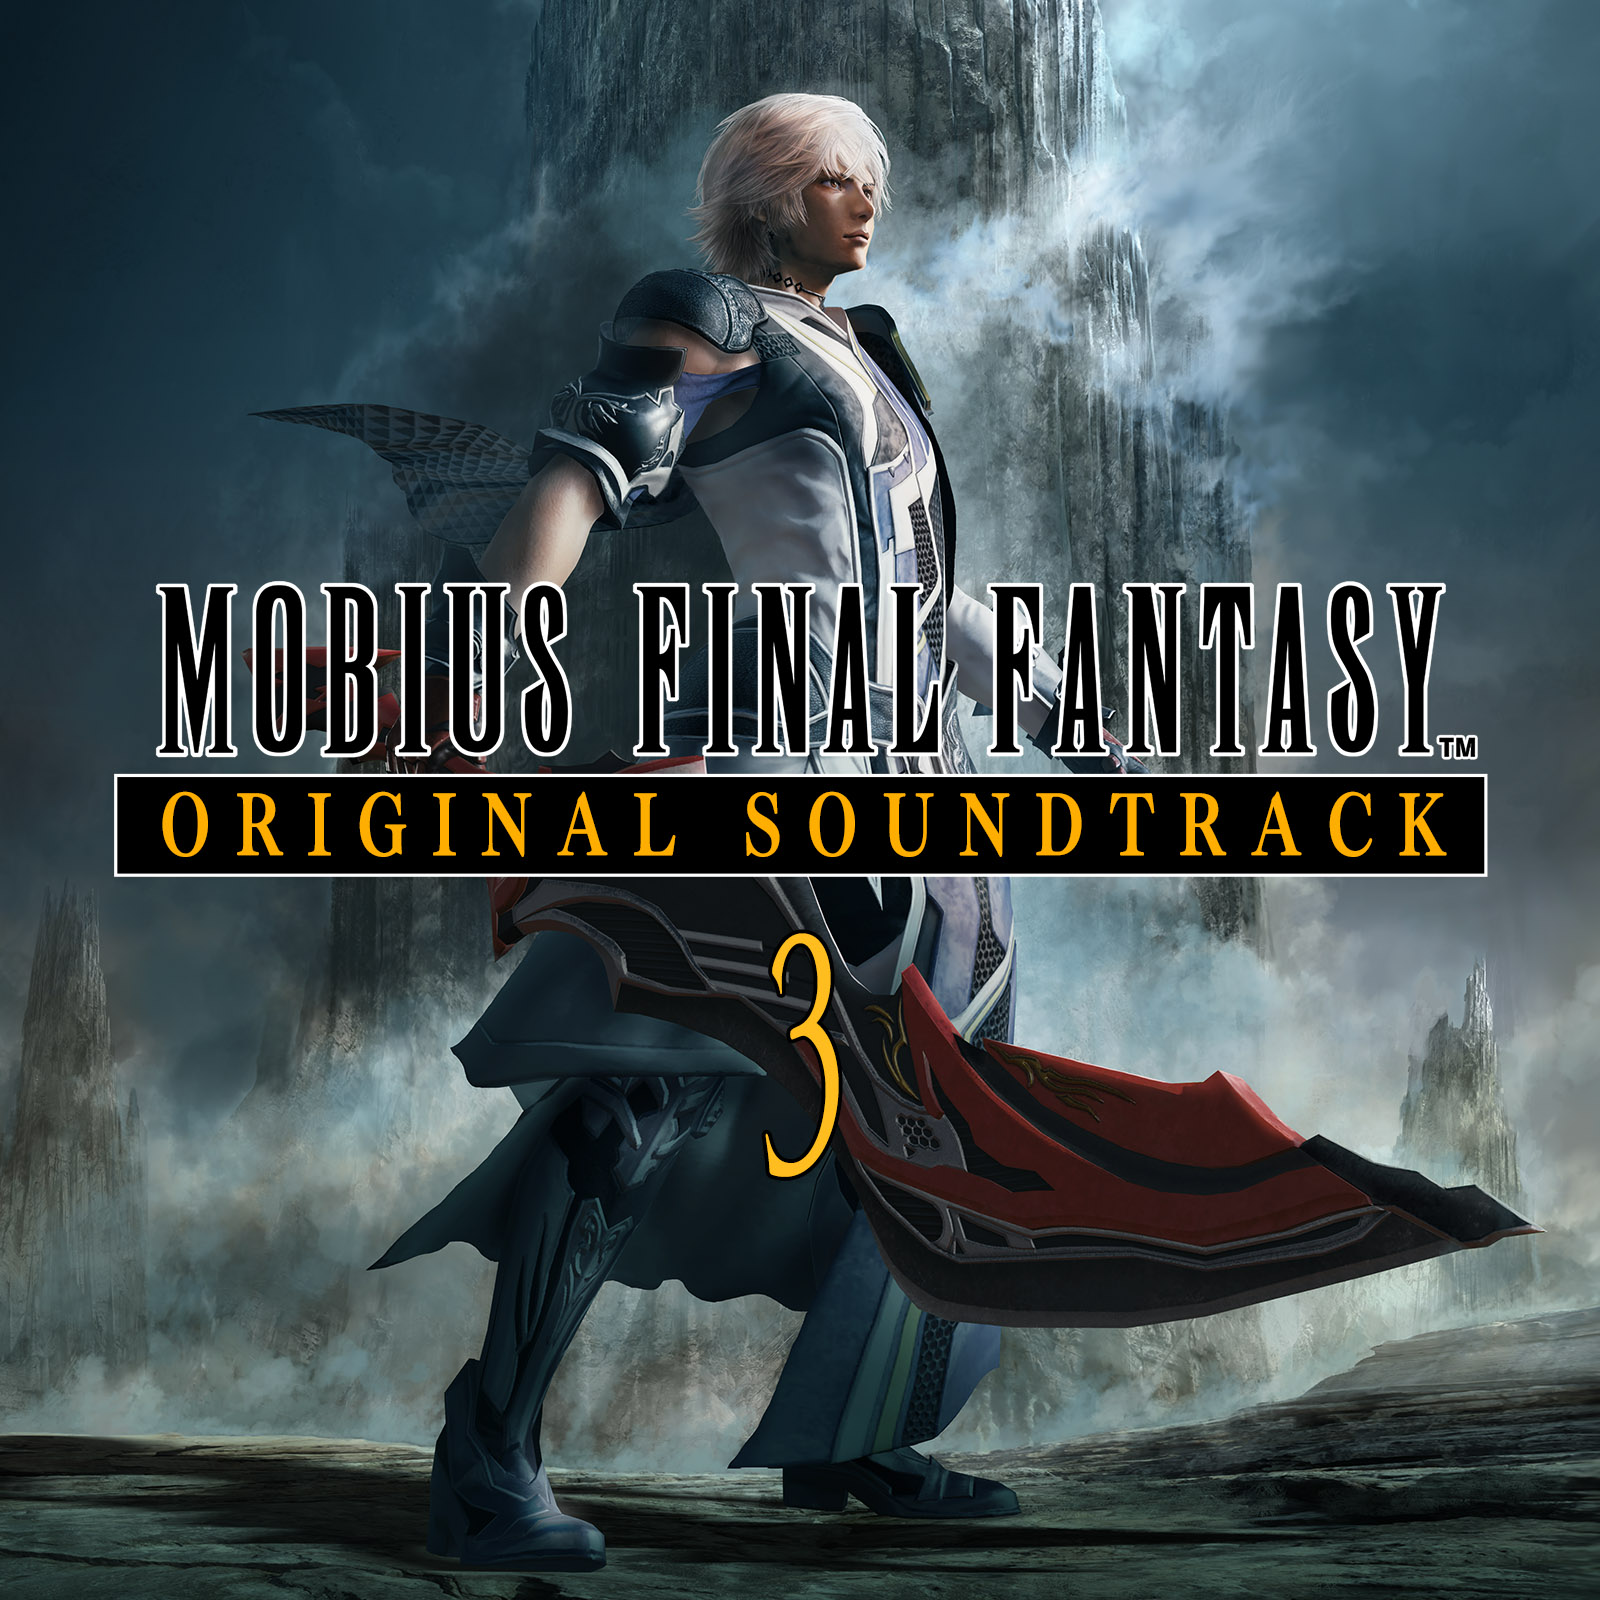 Mobius Final Fantasy Original Soundtrack 3 破滅の戦士篇 のオリジナル サウンドトラックを ダウンロード版限定で全世界配信開始 ニュース ファイナルファンタジーポータルサイト Square Enix